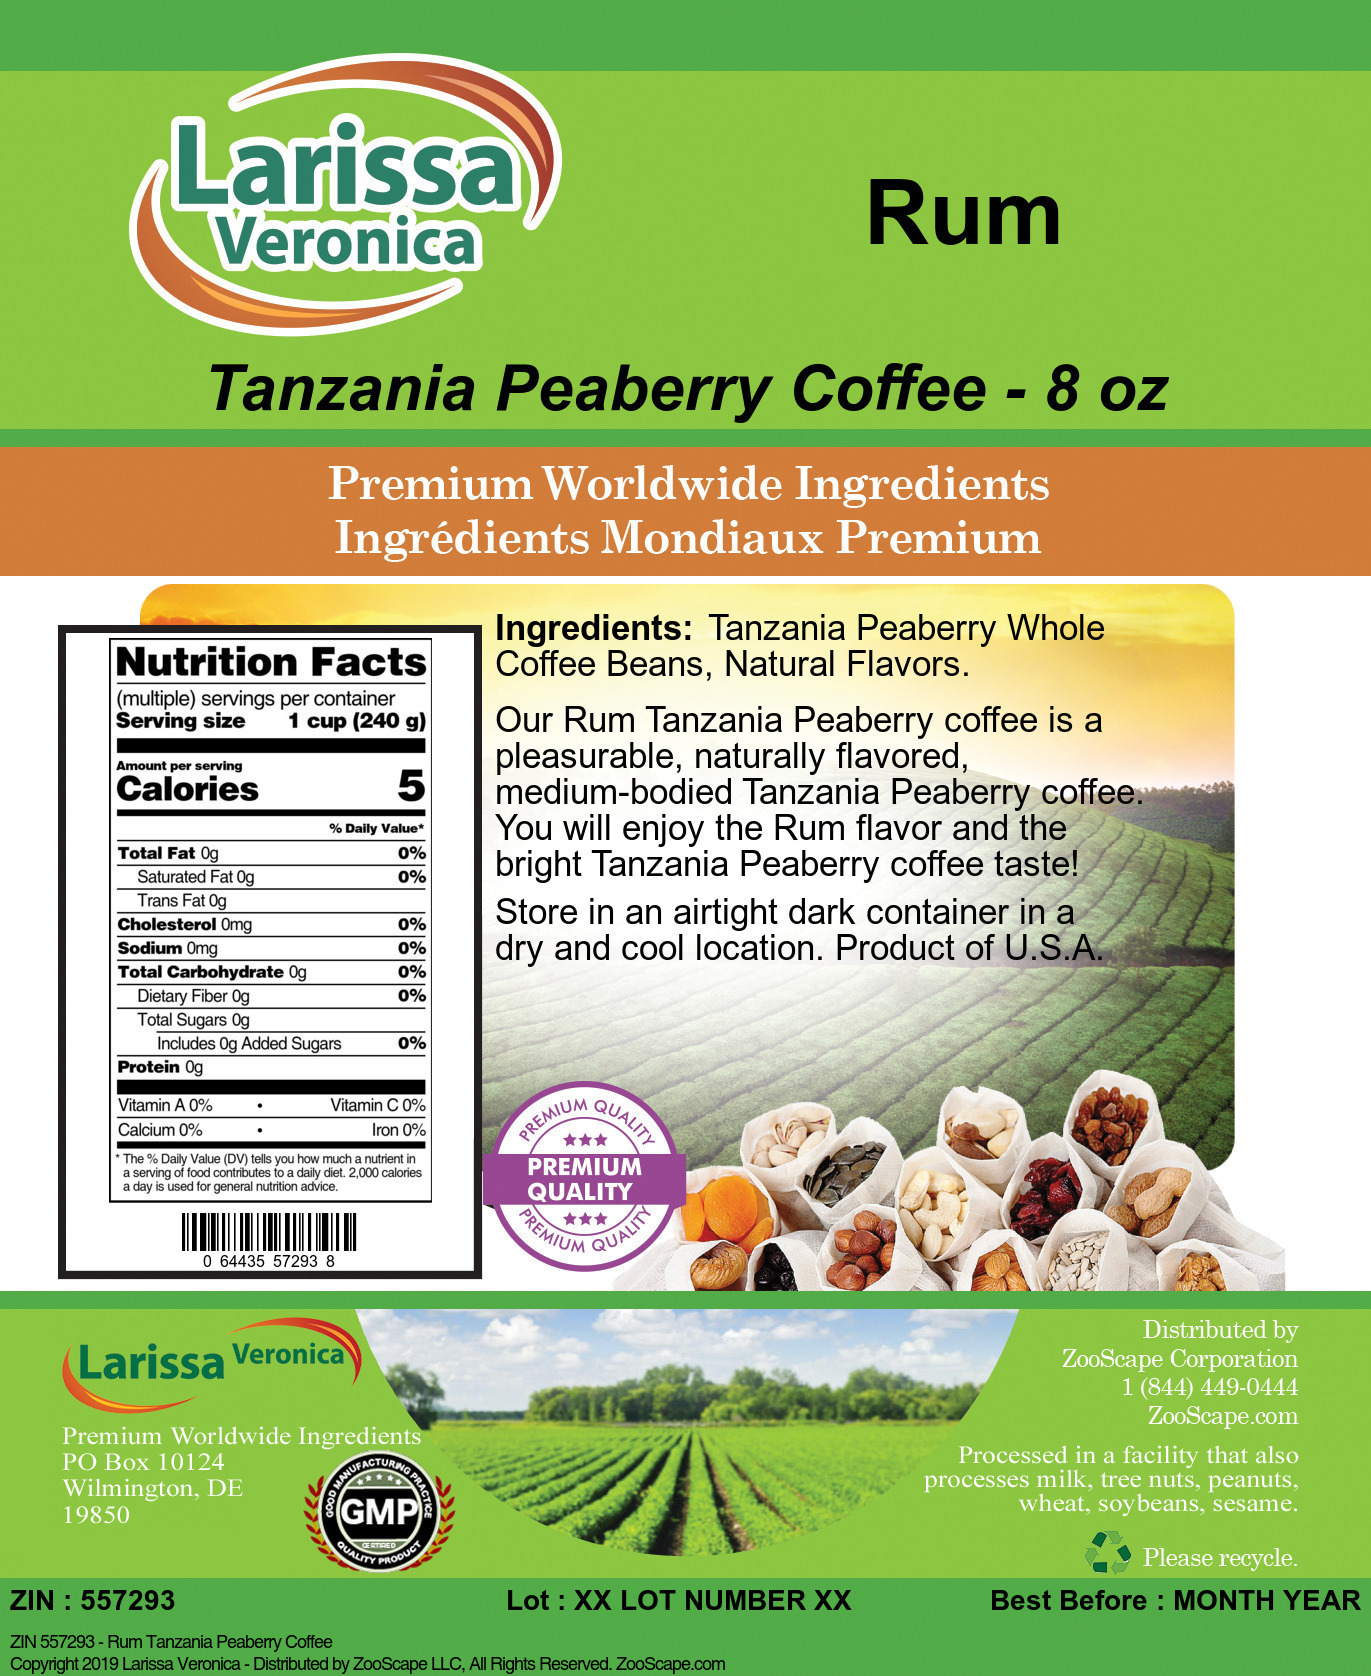 Rum Tanzania Peaberry Coffee - Label